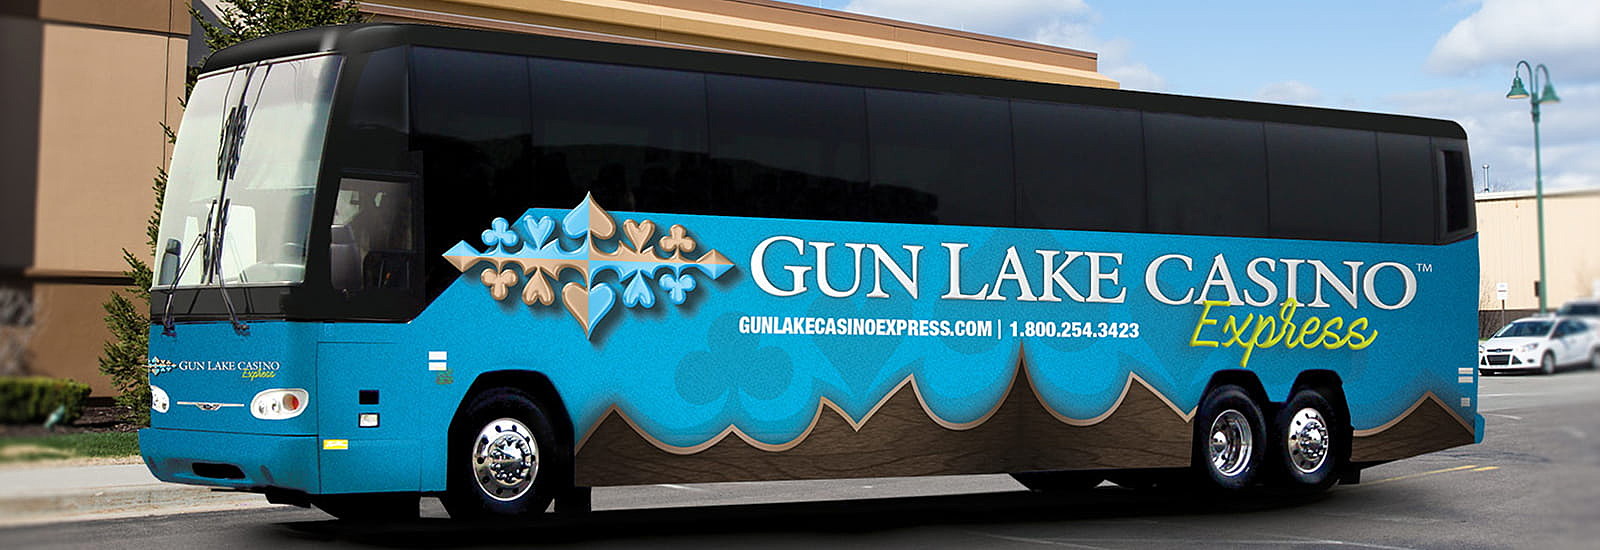 jobs gun lake casino